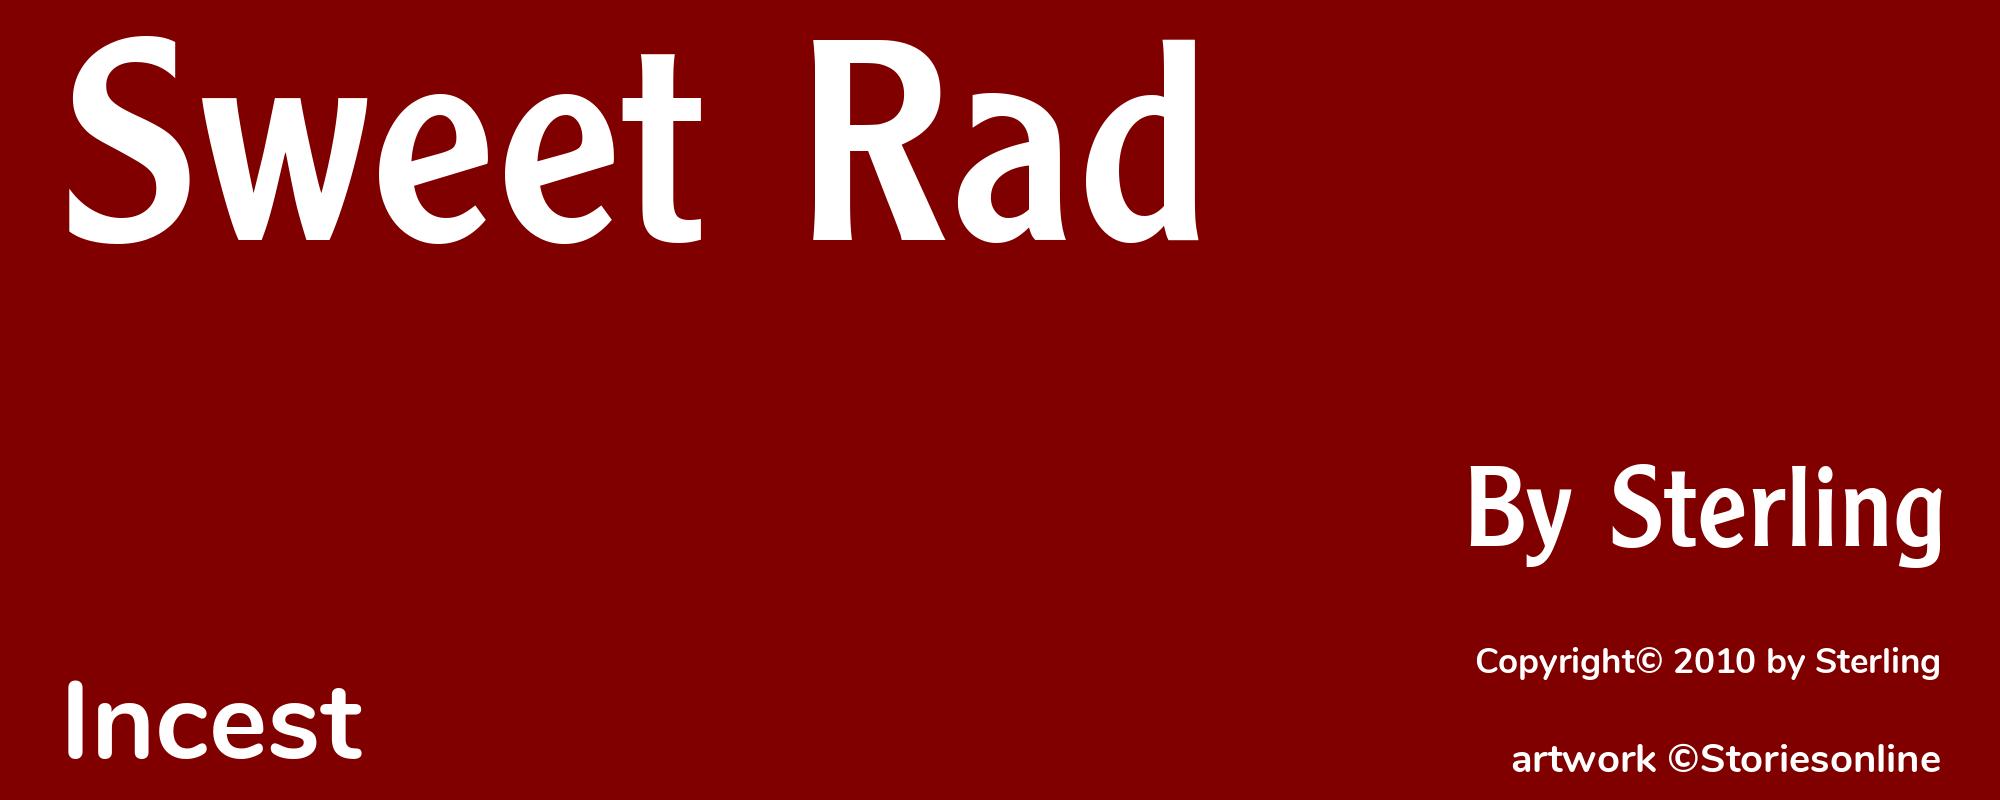 Sweet Rad - Cover